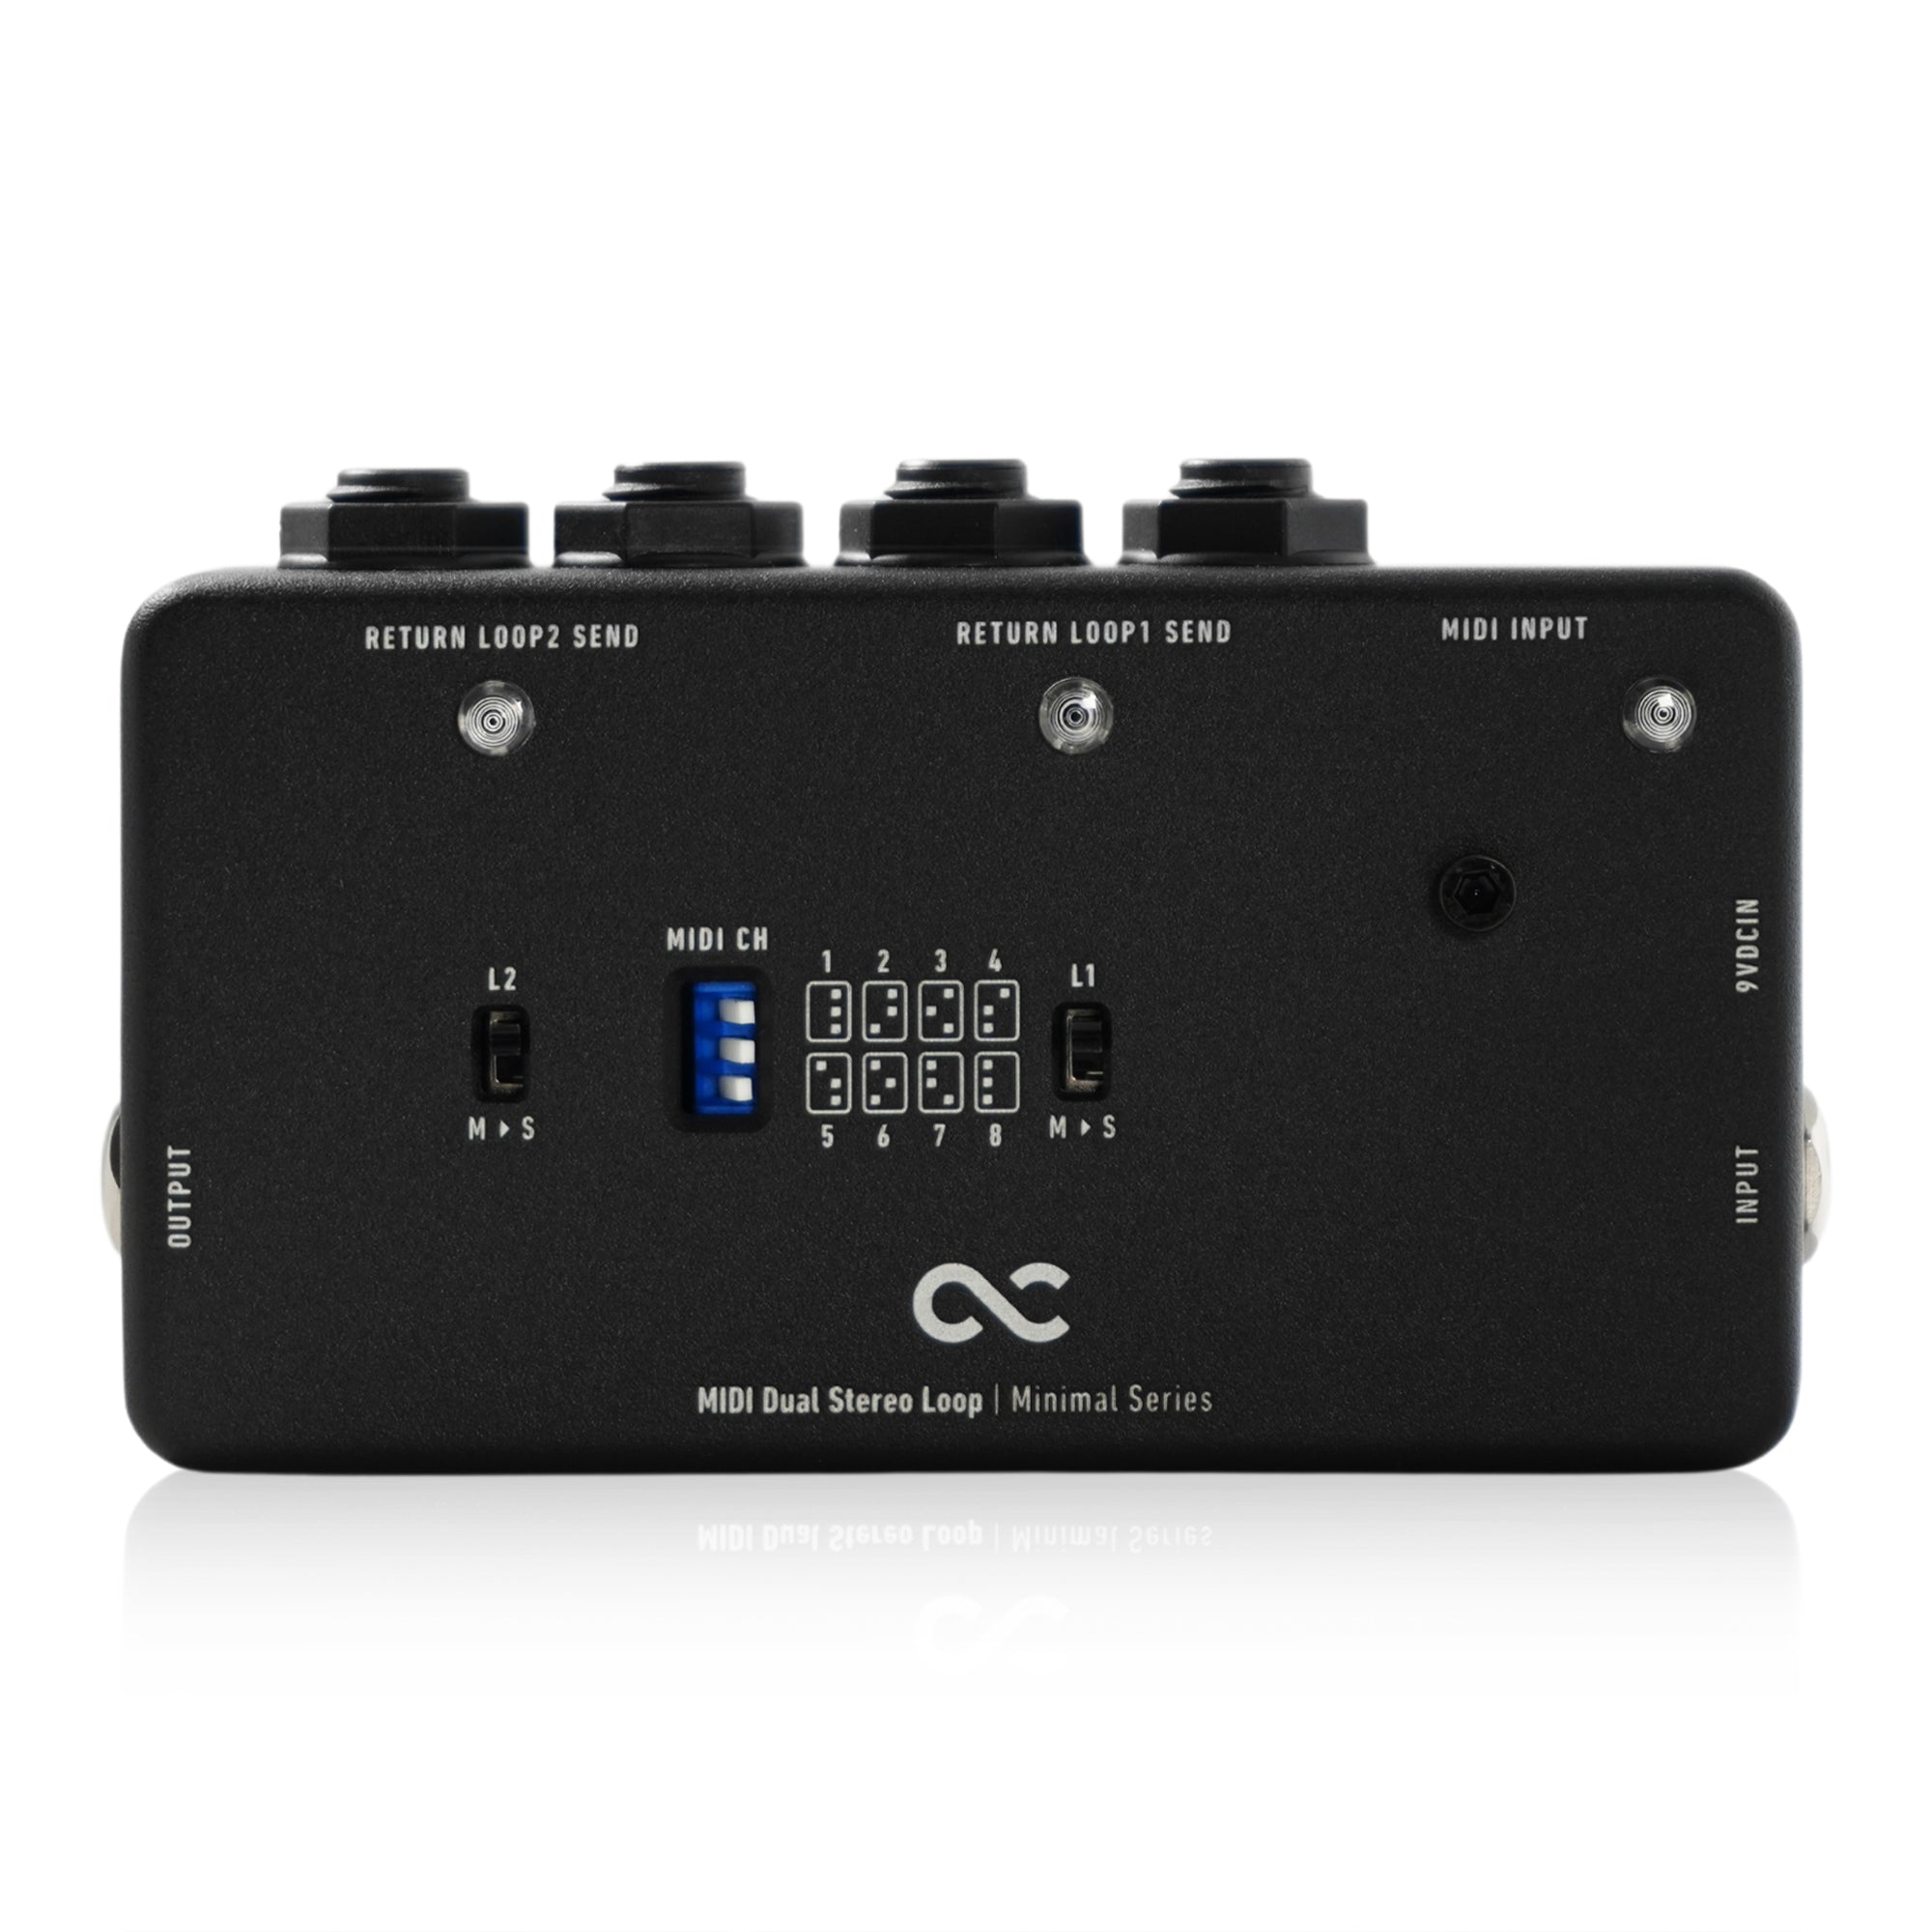 Minimal Series MIDI Dual Stereo Loop (OC-M-MDSL)